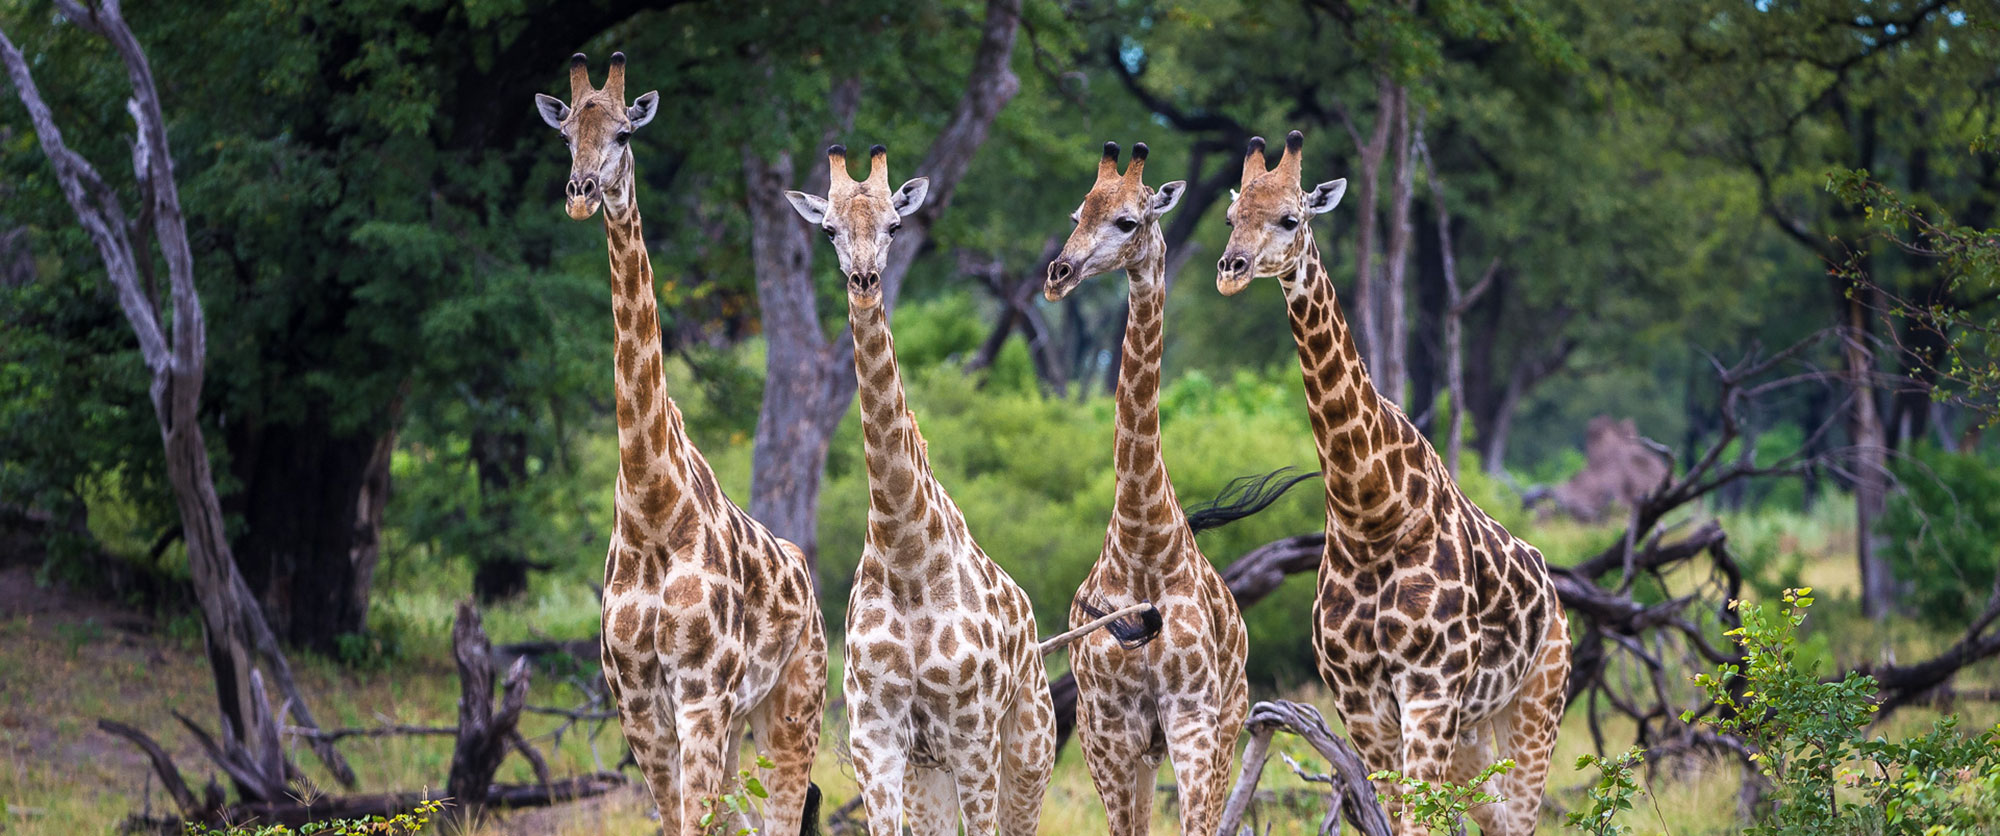 Giraffes spotted on safari at Kings Pool Camp, Linyanti Concession, Botswana